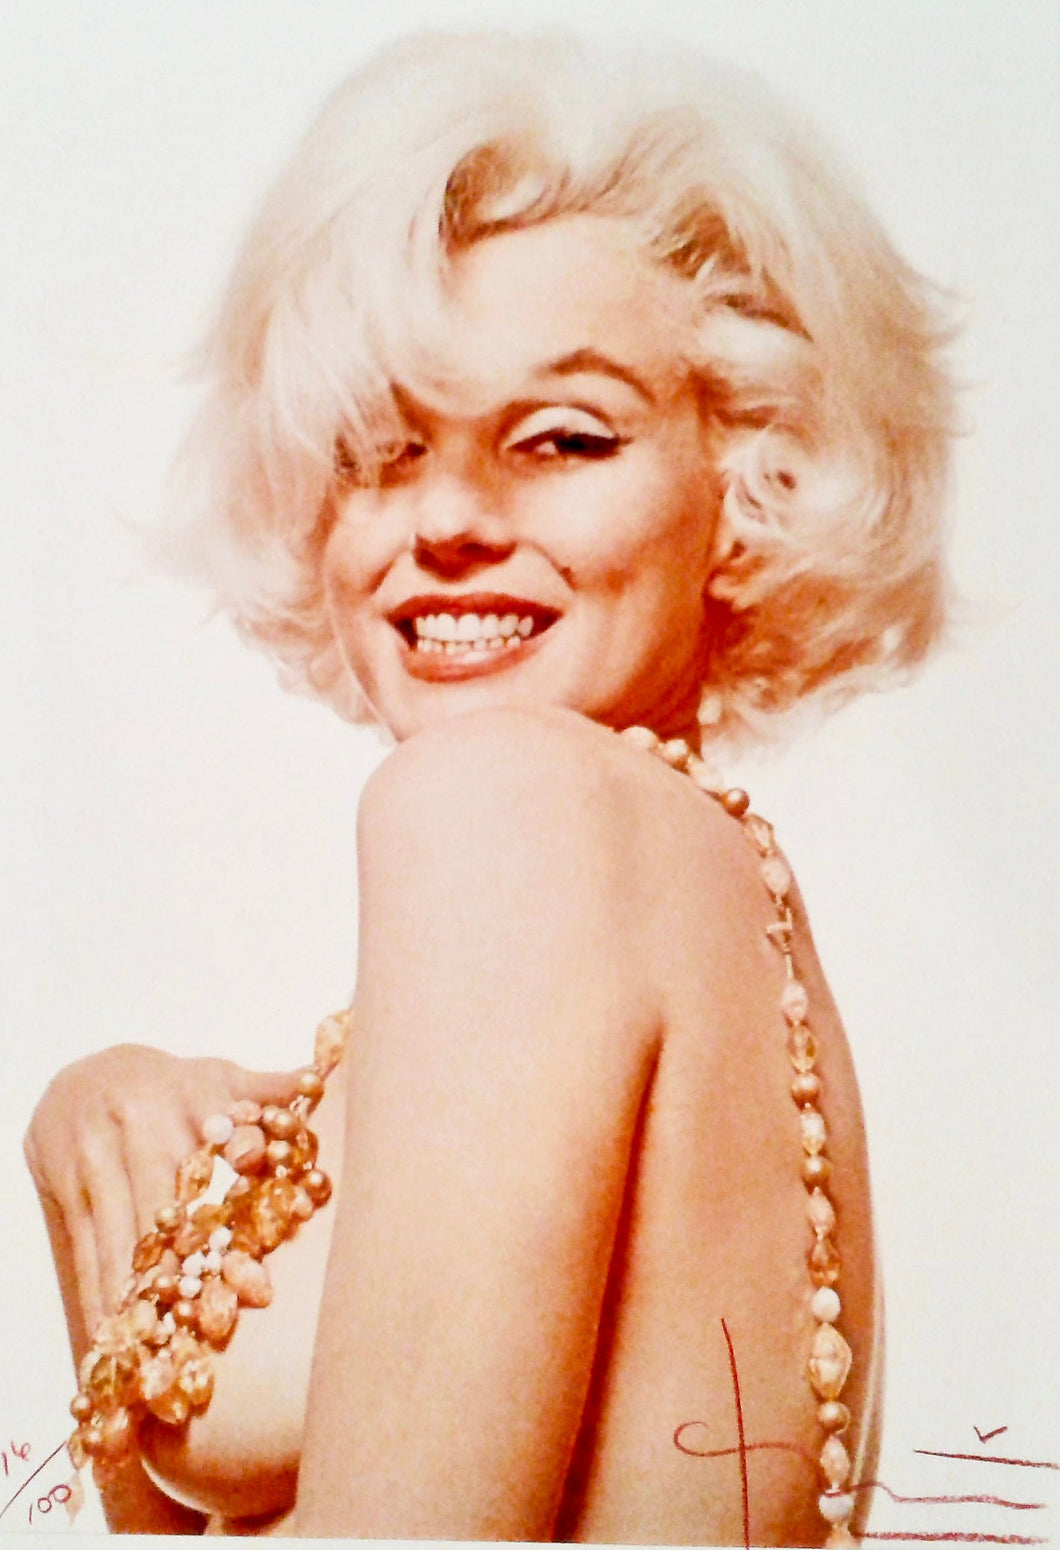 Marilyn Boob Smile by Bert Stern, The Last Sitting Portrait Photo of Marilyn Monroe